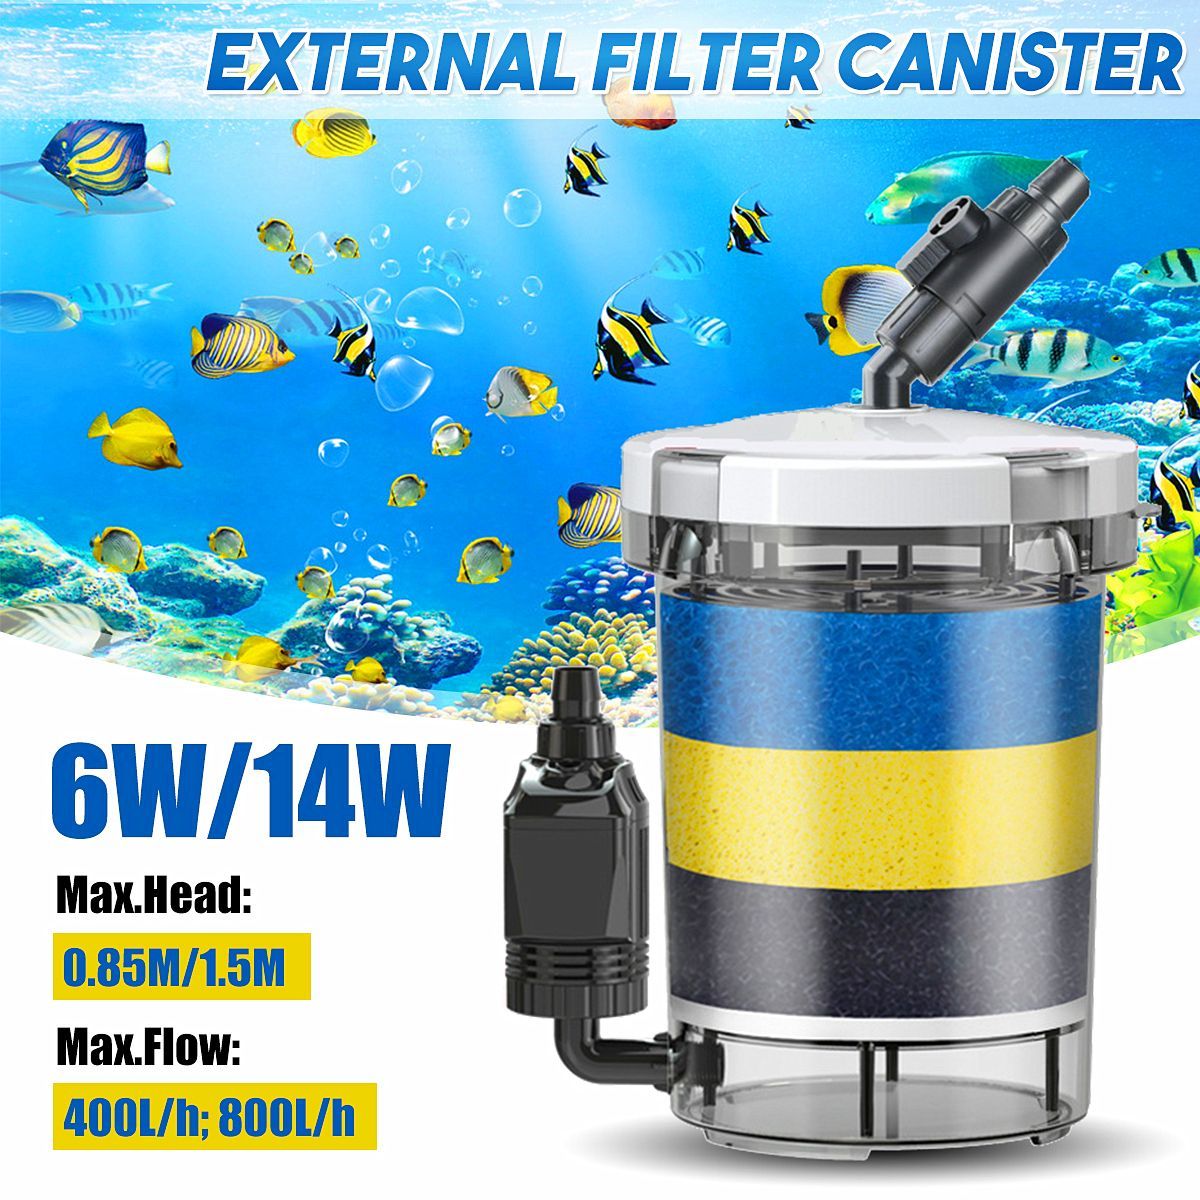 220V-Aquarium-External-Canister-Filter-Fish-Water-Tank-Air-Pump-Sponge-Pond-800LH-1616492